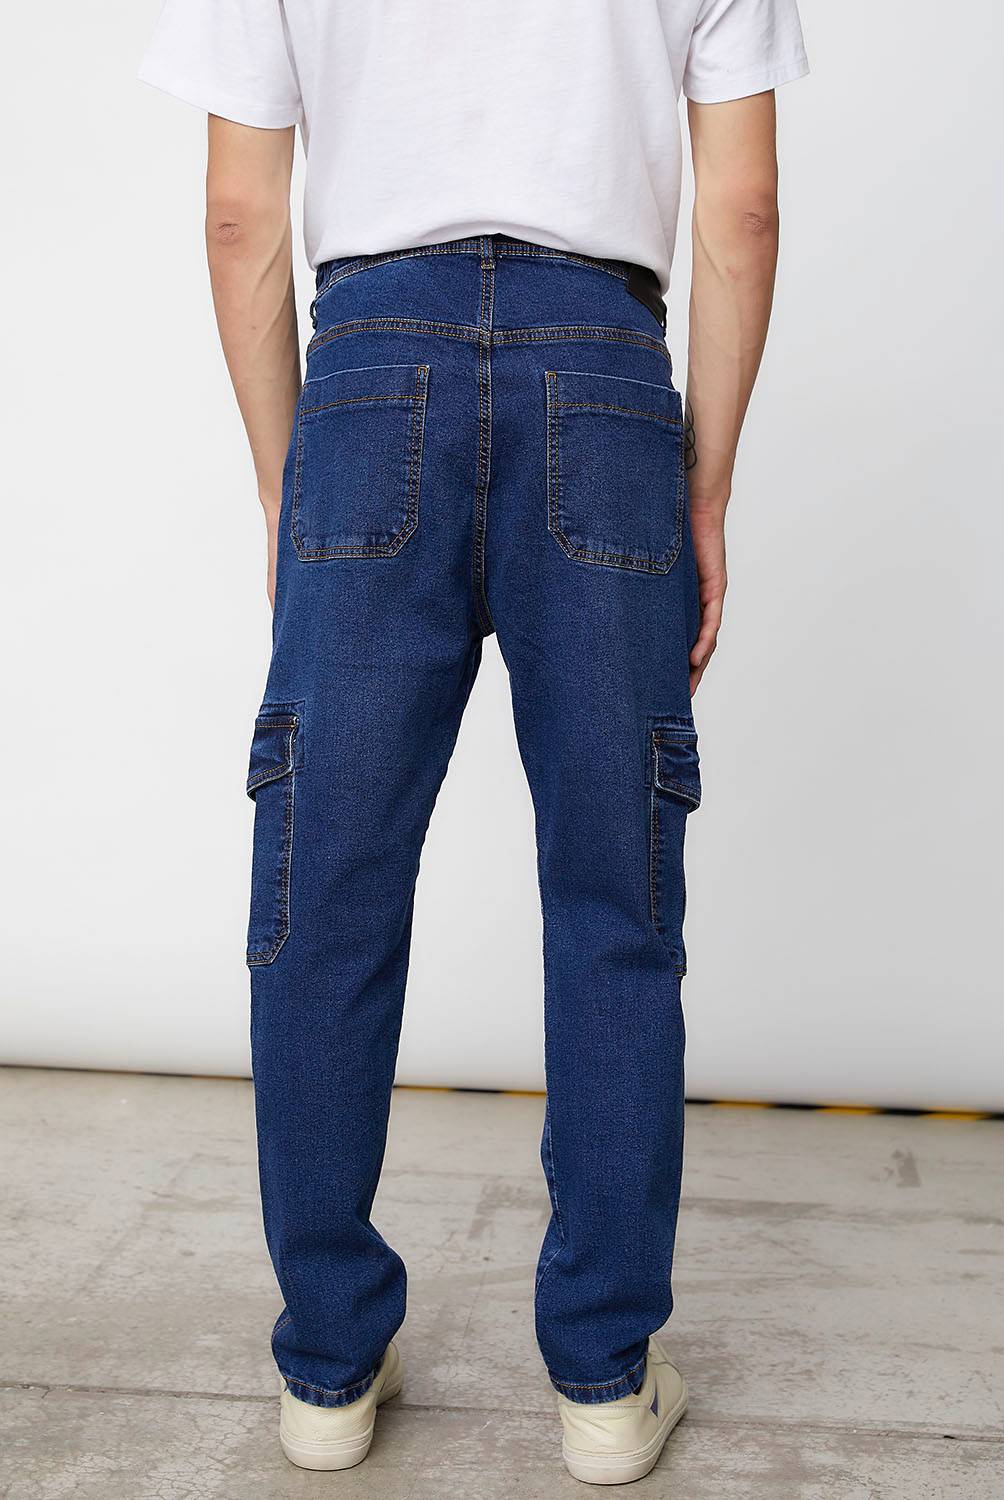 AMERICANINO - Jeans Slim Fit Hombre Americanino